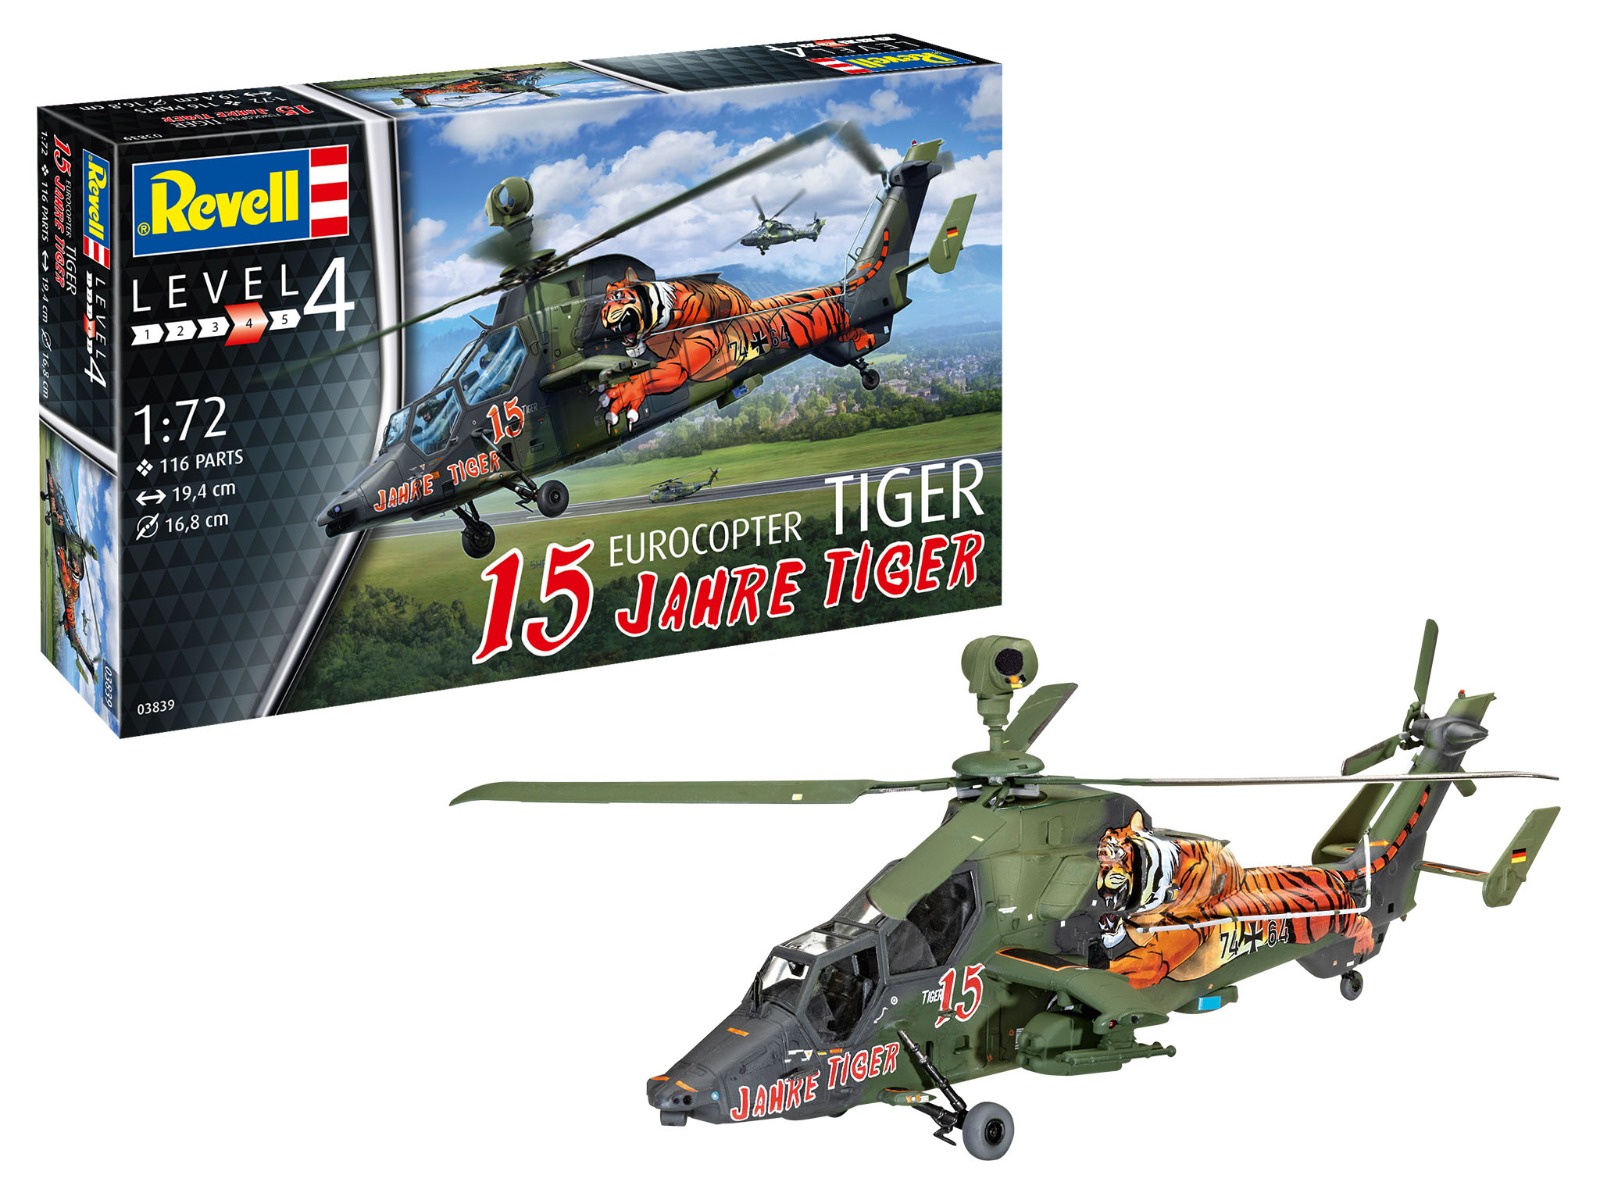 Revell 03839 - Eurocopter Tiger -15 Jahre Tiger. 1:72